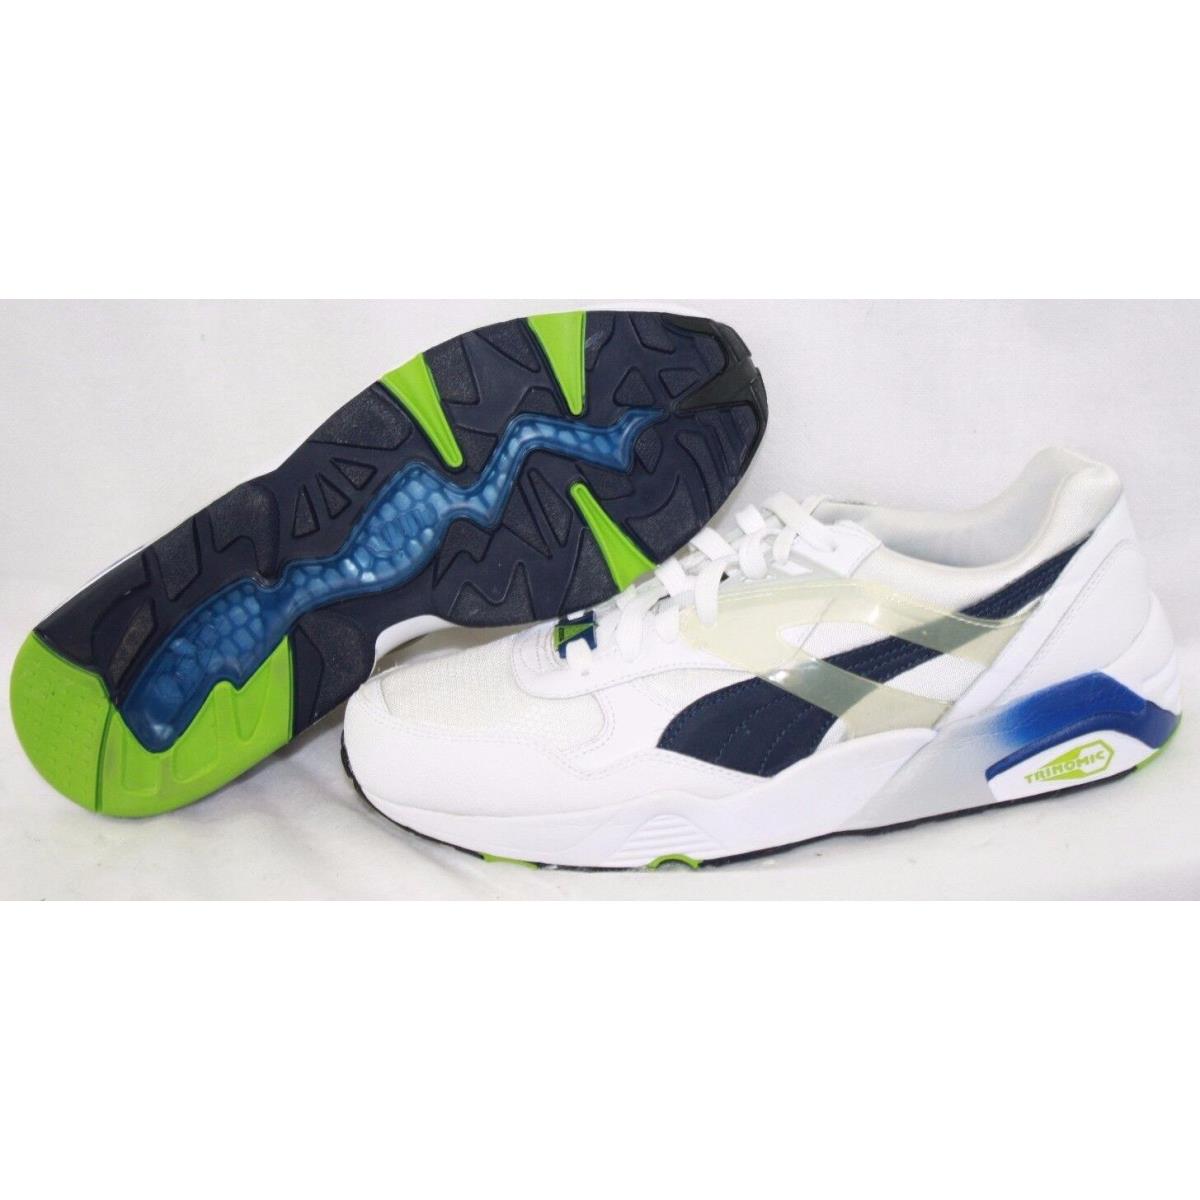 Mens Puma R698 Mesh Neoprene 359125 01 White Blue Sneakers Shoes